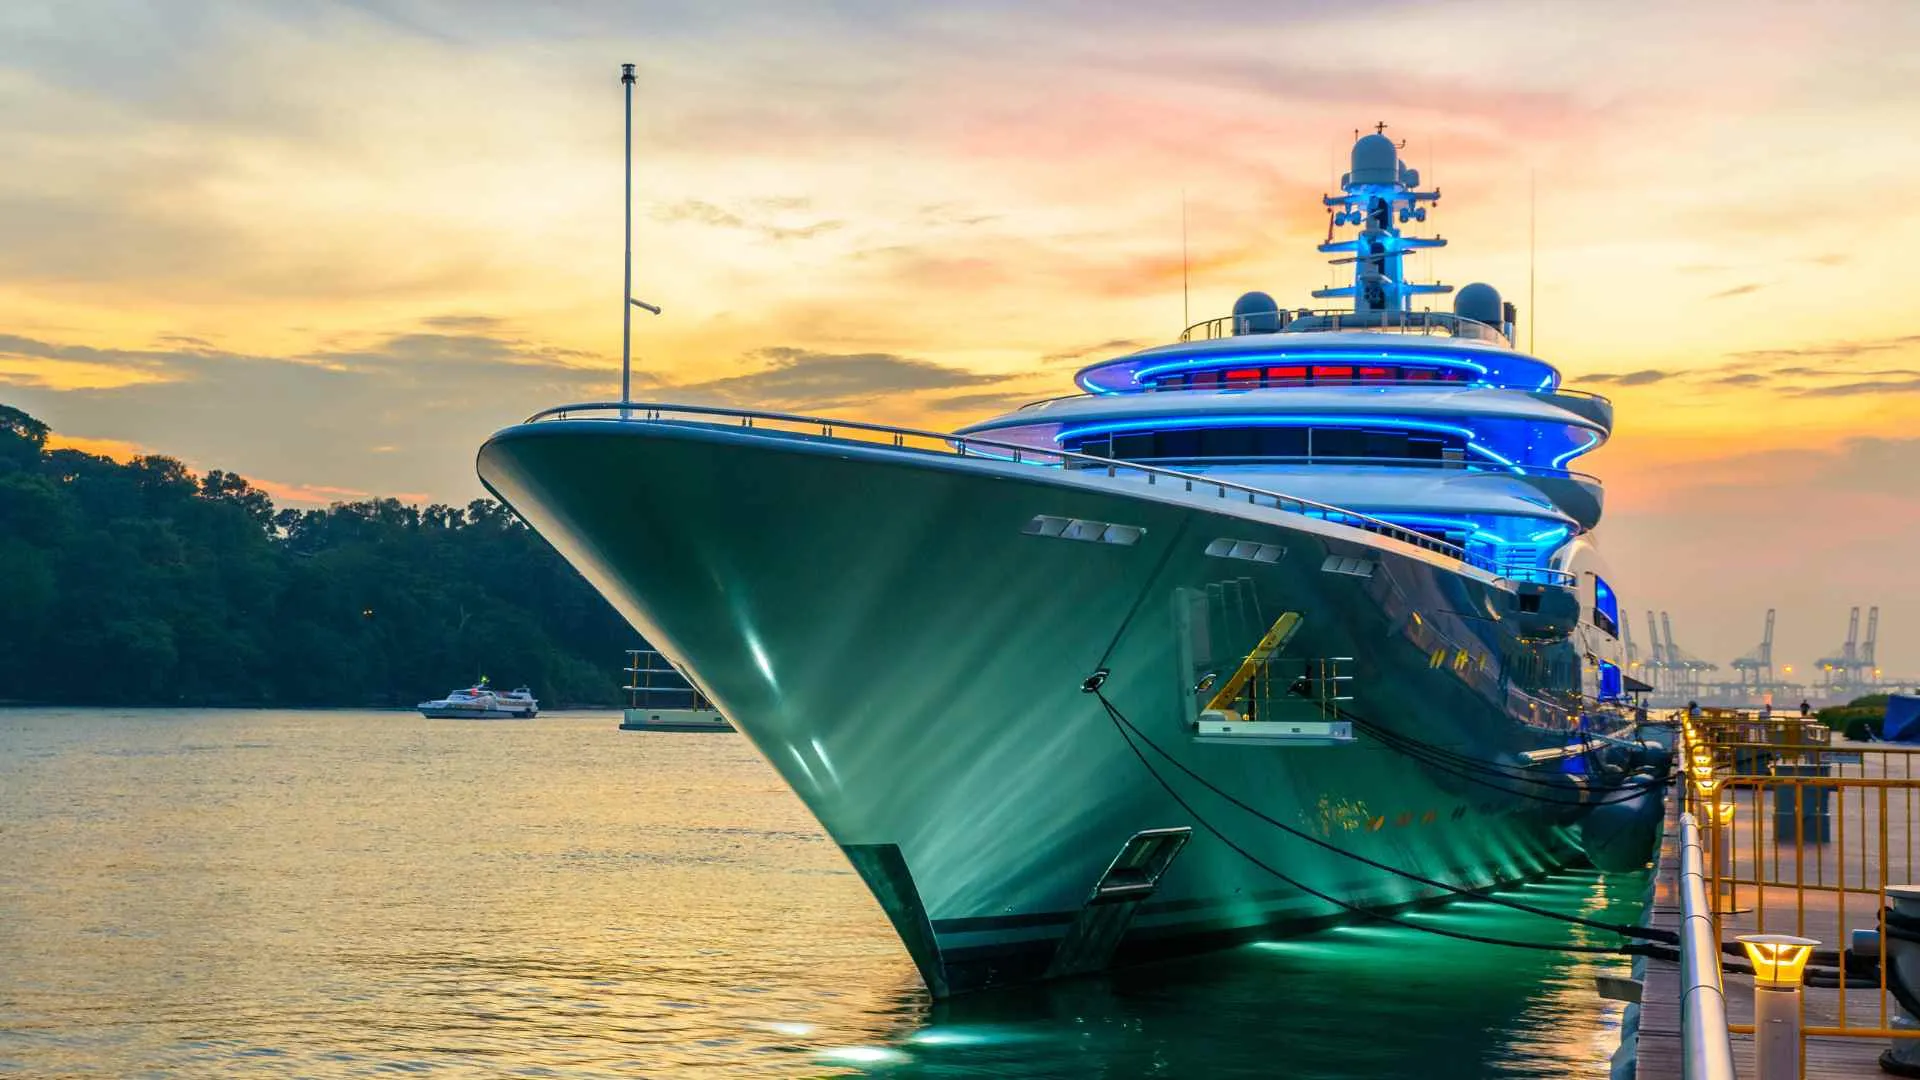 luxury ship during sunset